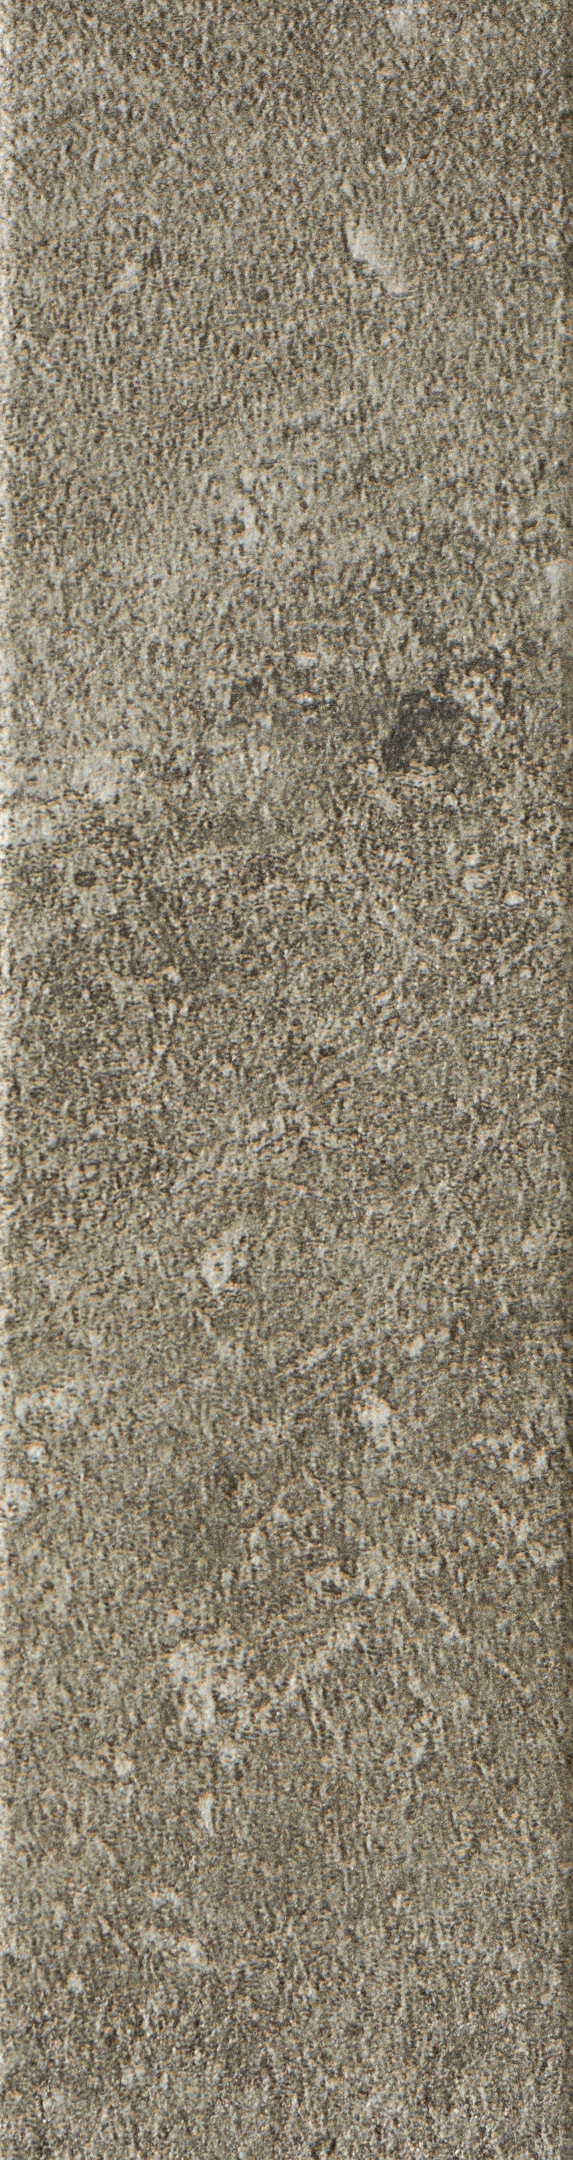 Клинкерная плитка Керамин Юта 2 серая 245х65х7 мм (34 шт.=0,54 кв.м) клинкерная плитка керамин мичиган 7 белая 245х65х7 мм 34 шт 0 54 кв м